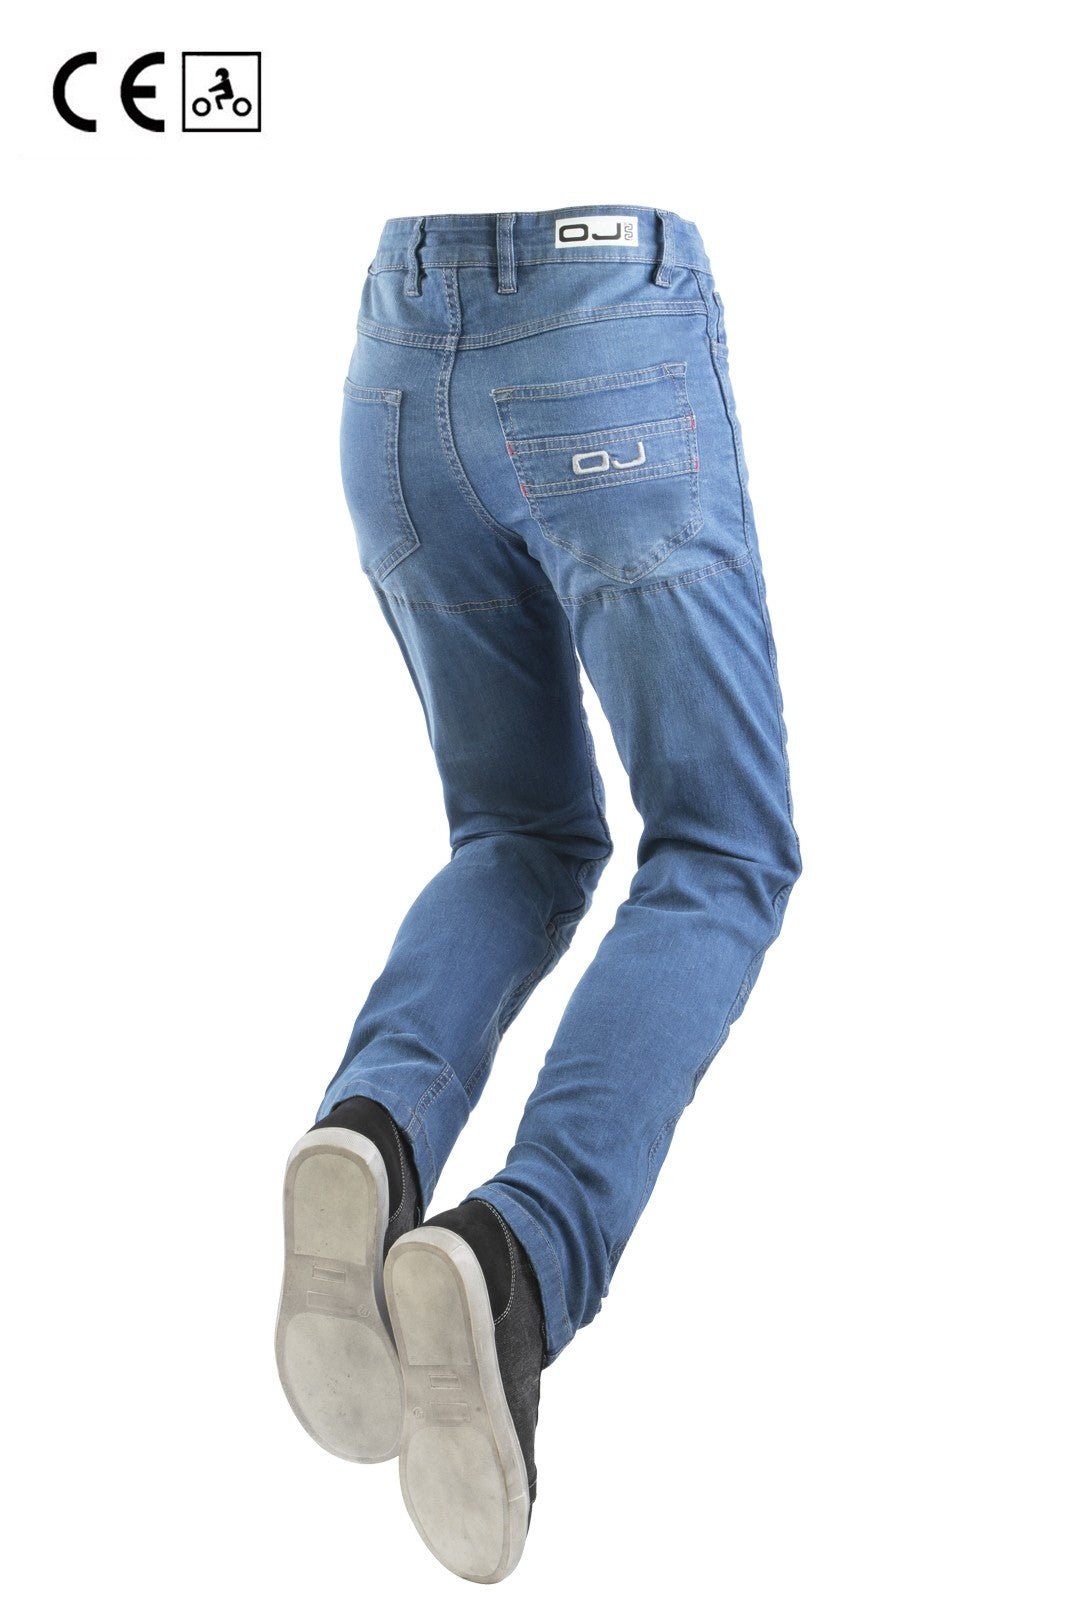 Jeans moto OJ EXPERIENCE LADY donna 4 stagioni, aramide e protezioni - OnTheRoad.shop - OJ